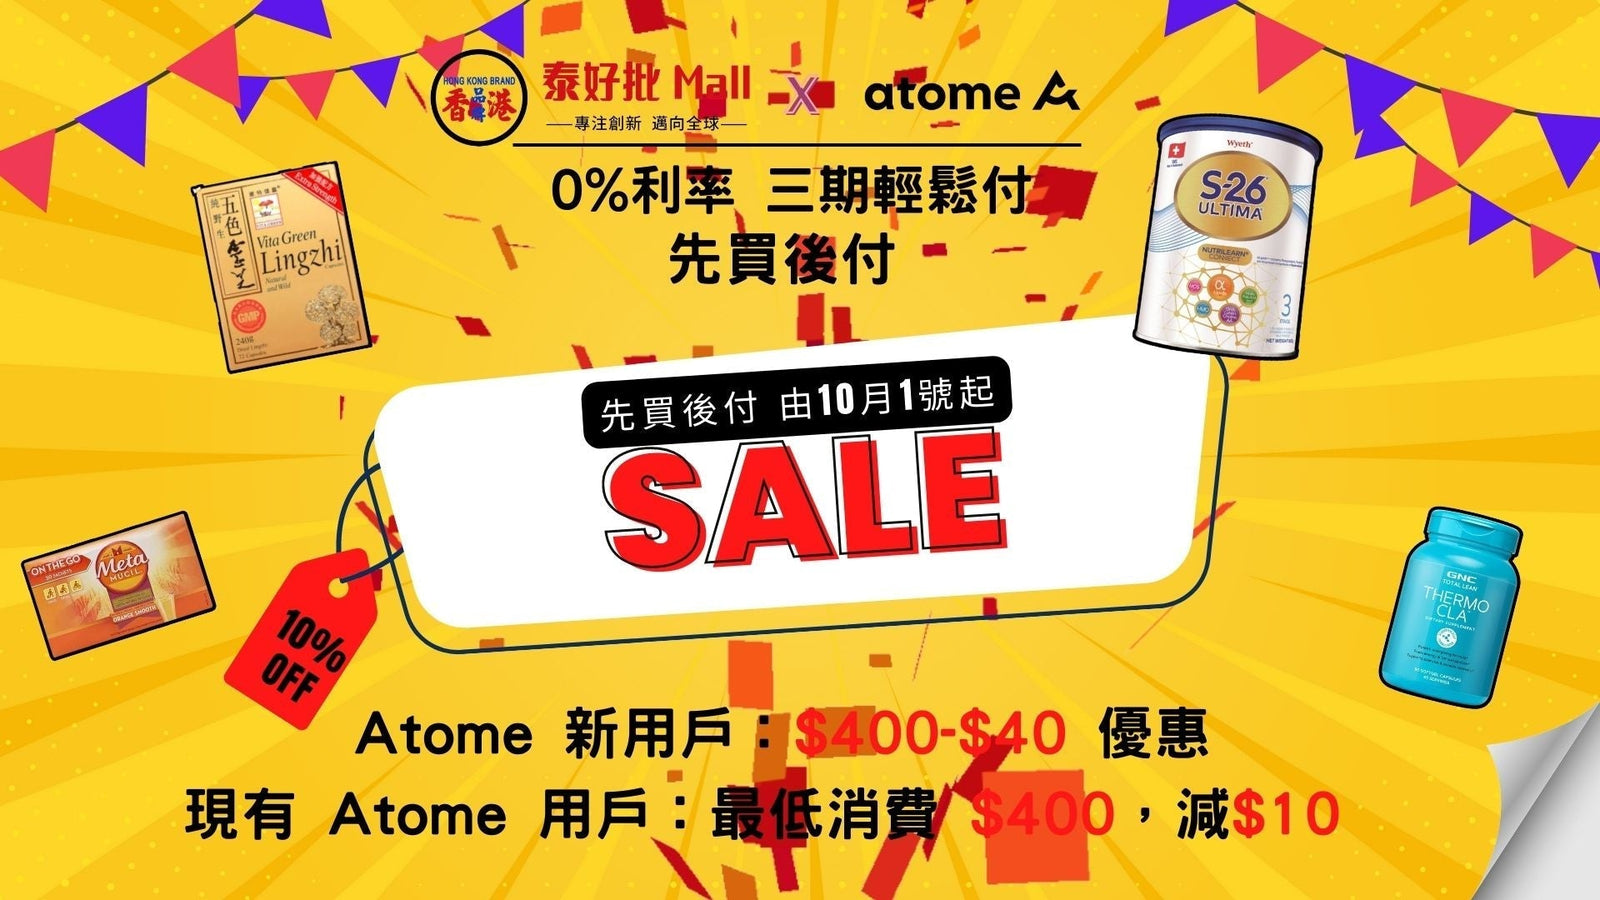 【Atome 新用户激筍優惠】 | Atome 新舊用户，消費即享$40優惠！ 泰好批—網絡批發直銷